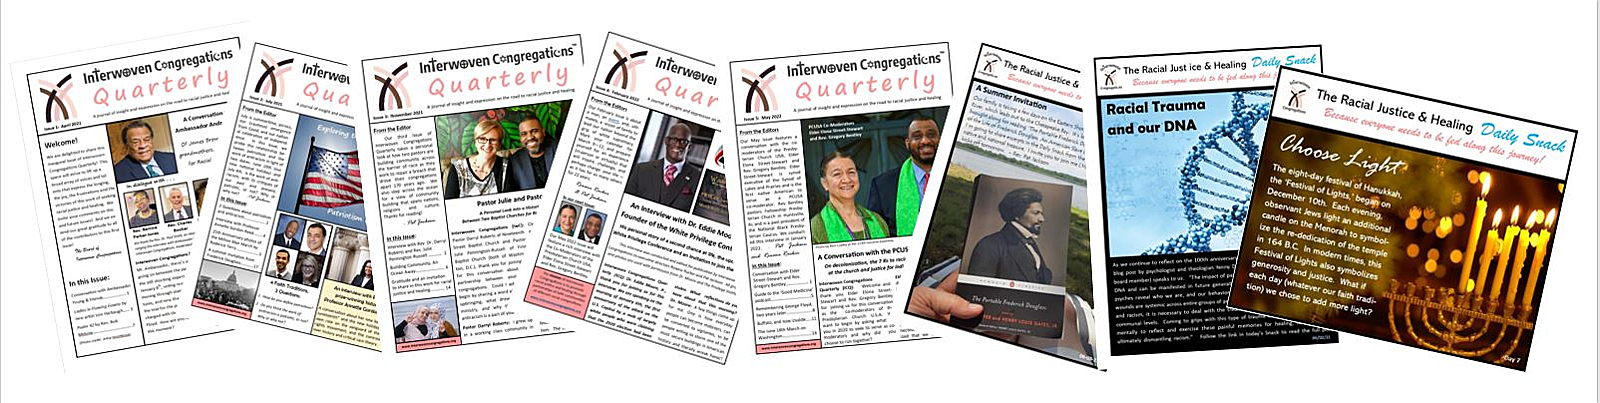 Interwoven Congregations Quarterly